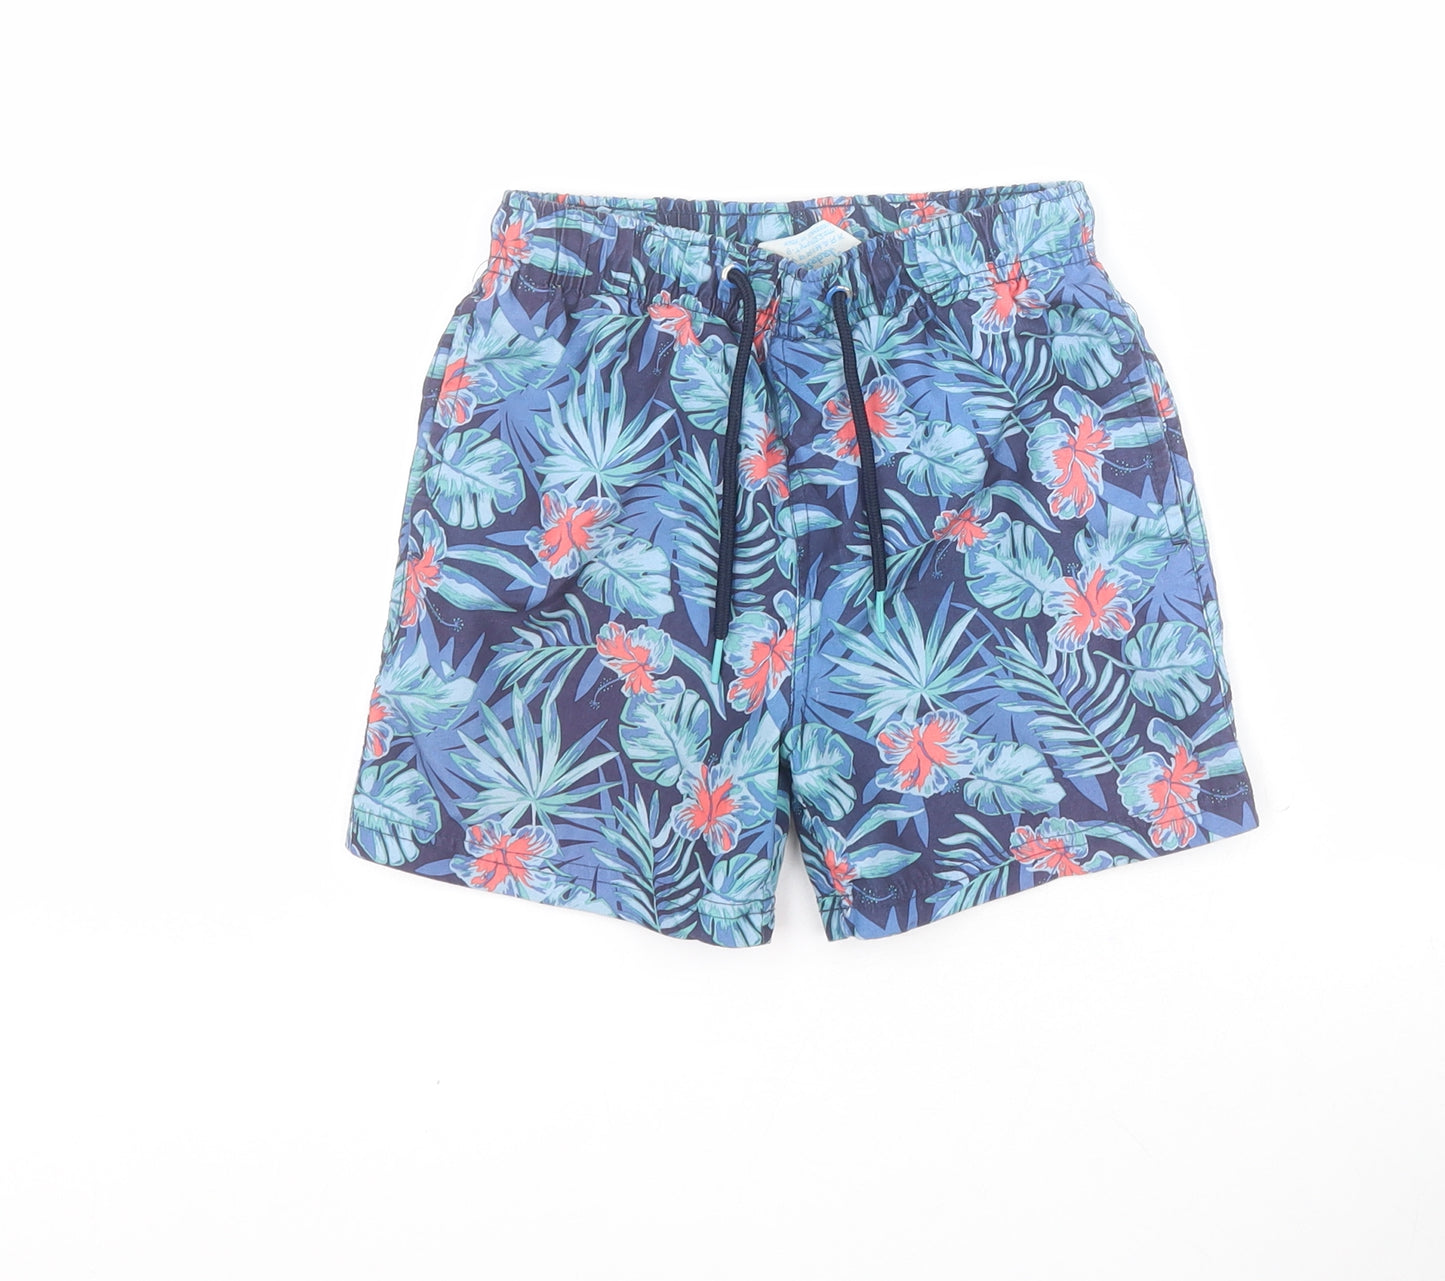 Primark Boys Blue Floral 100% Polyester Sweat Shorts Size 6-7 Years  Regular Drawstring - Swim shorts